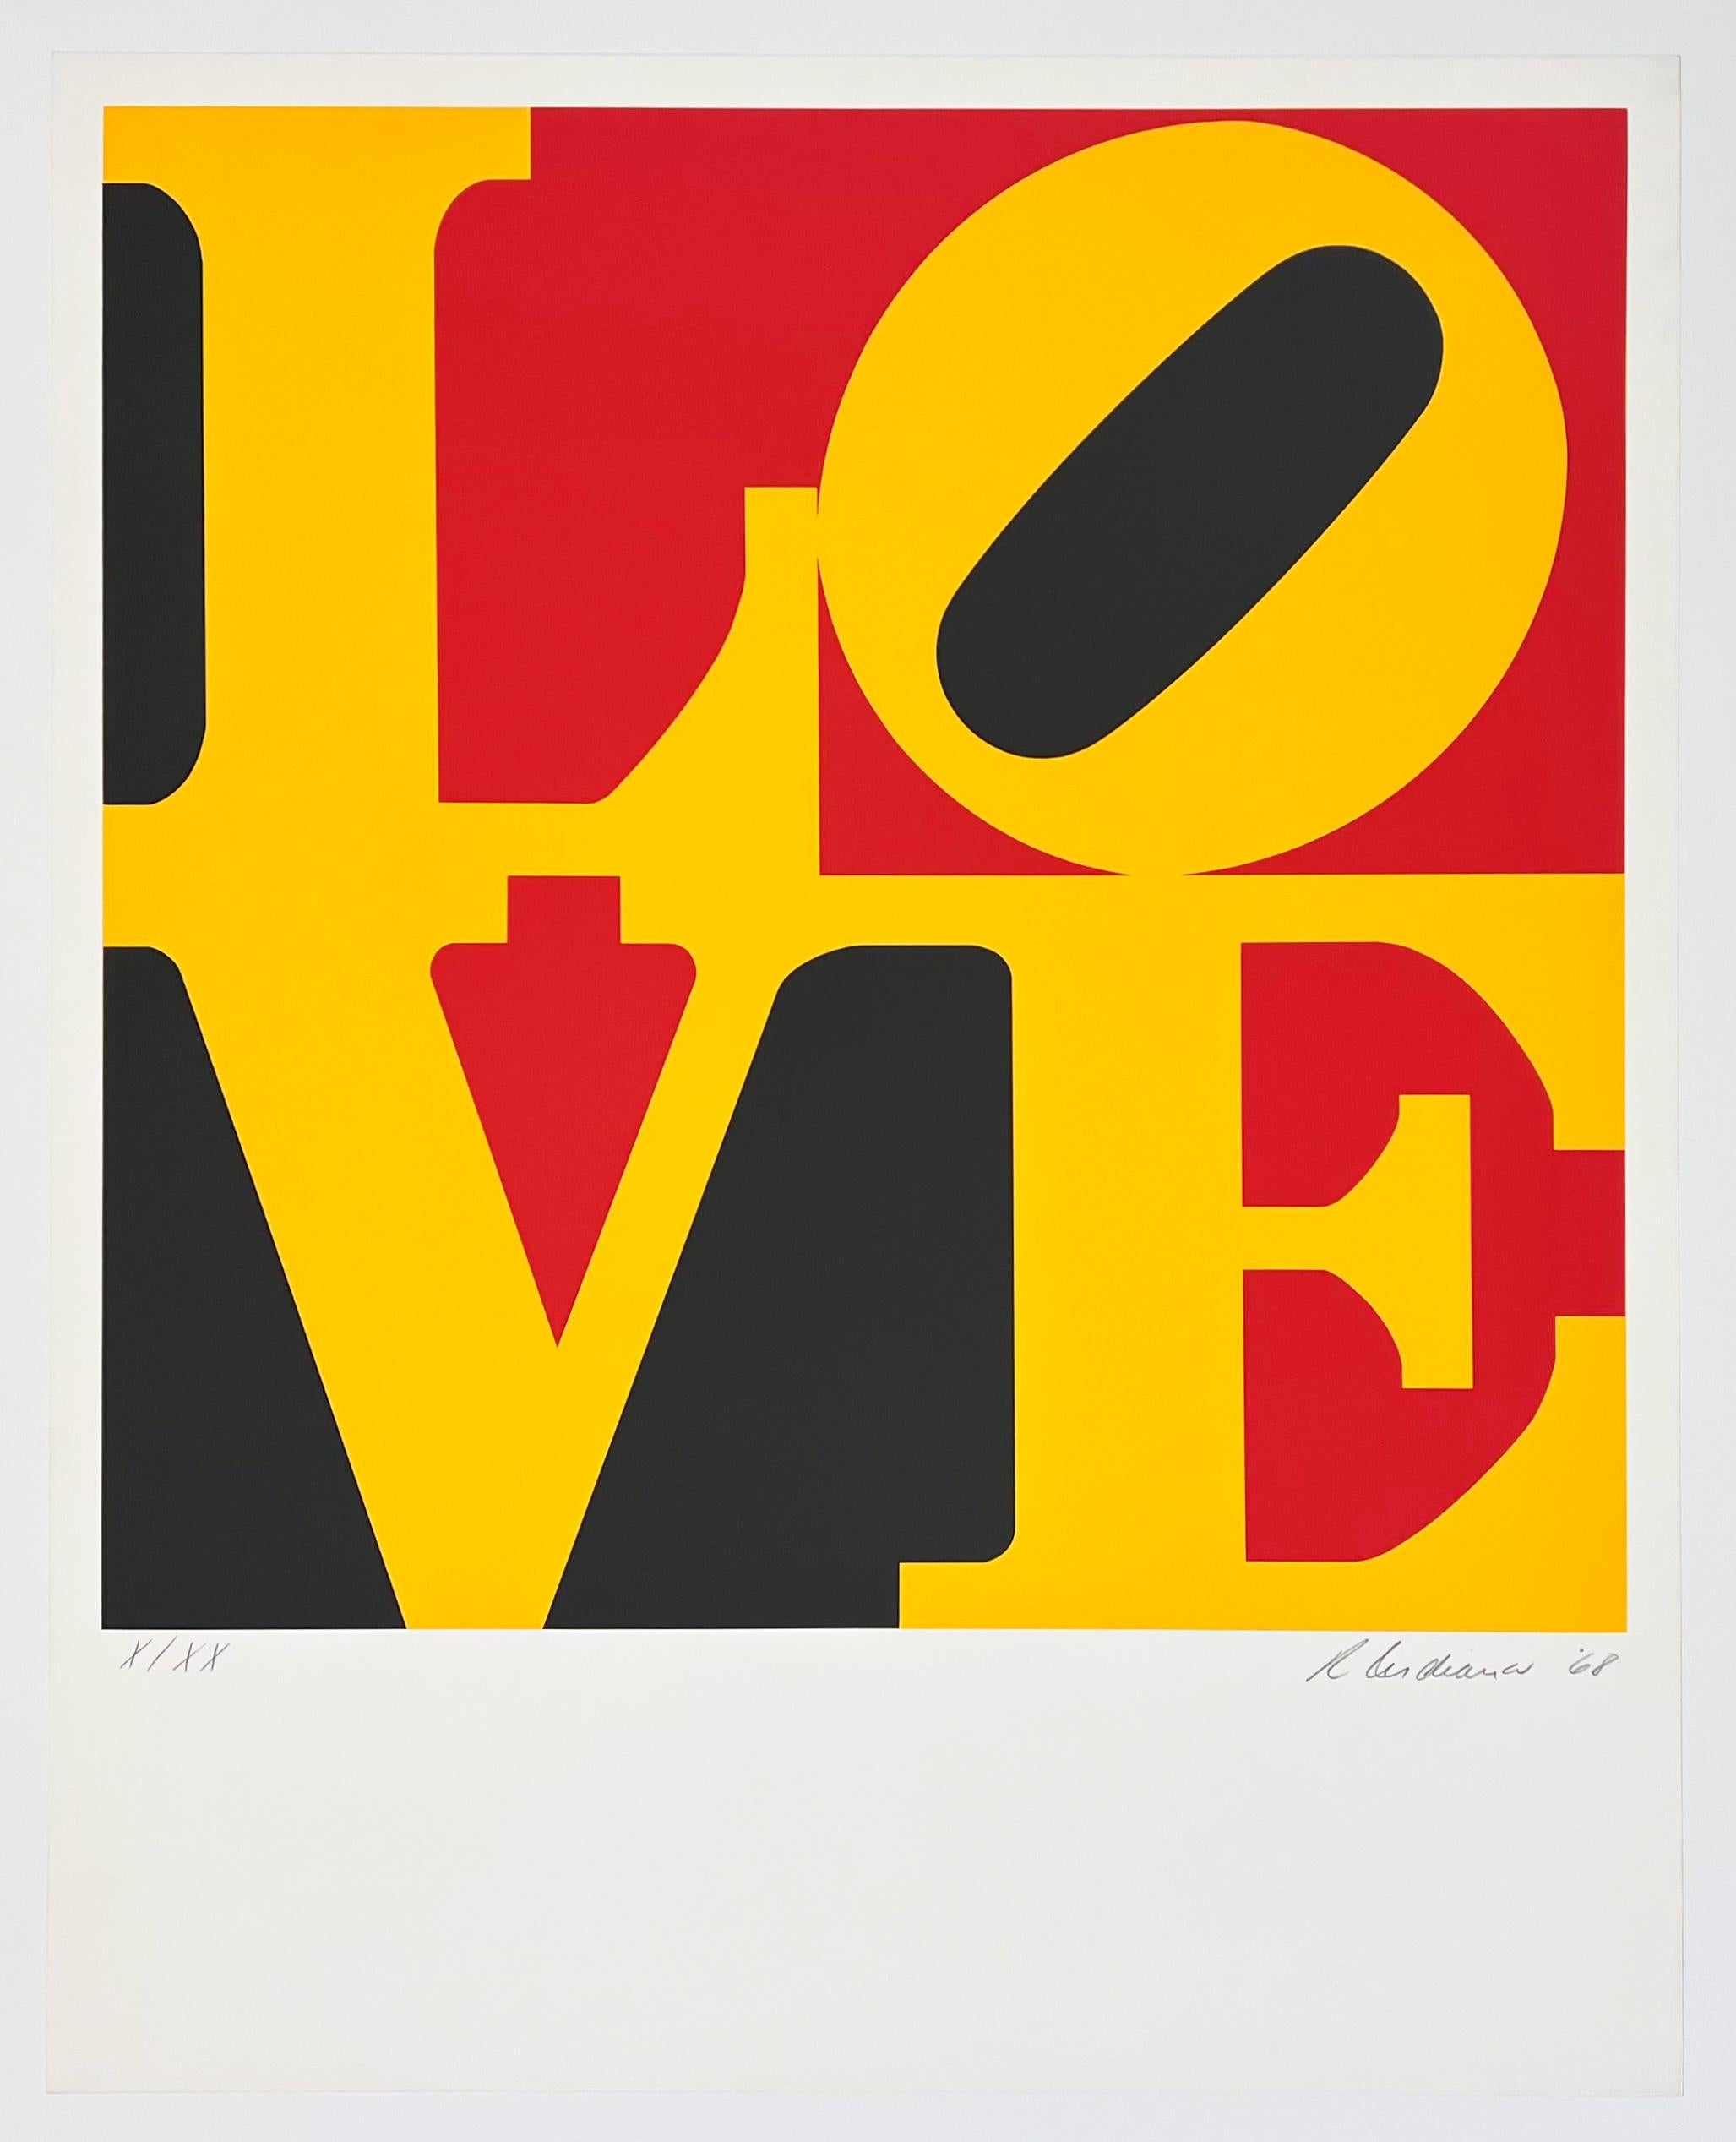 Artist: Robert Indiana
Medium: Screenprint
Title: The German Love
Year: 1968
Edition: X/XX
Sheet Size: 29 5/8